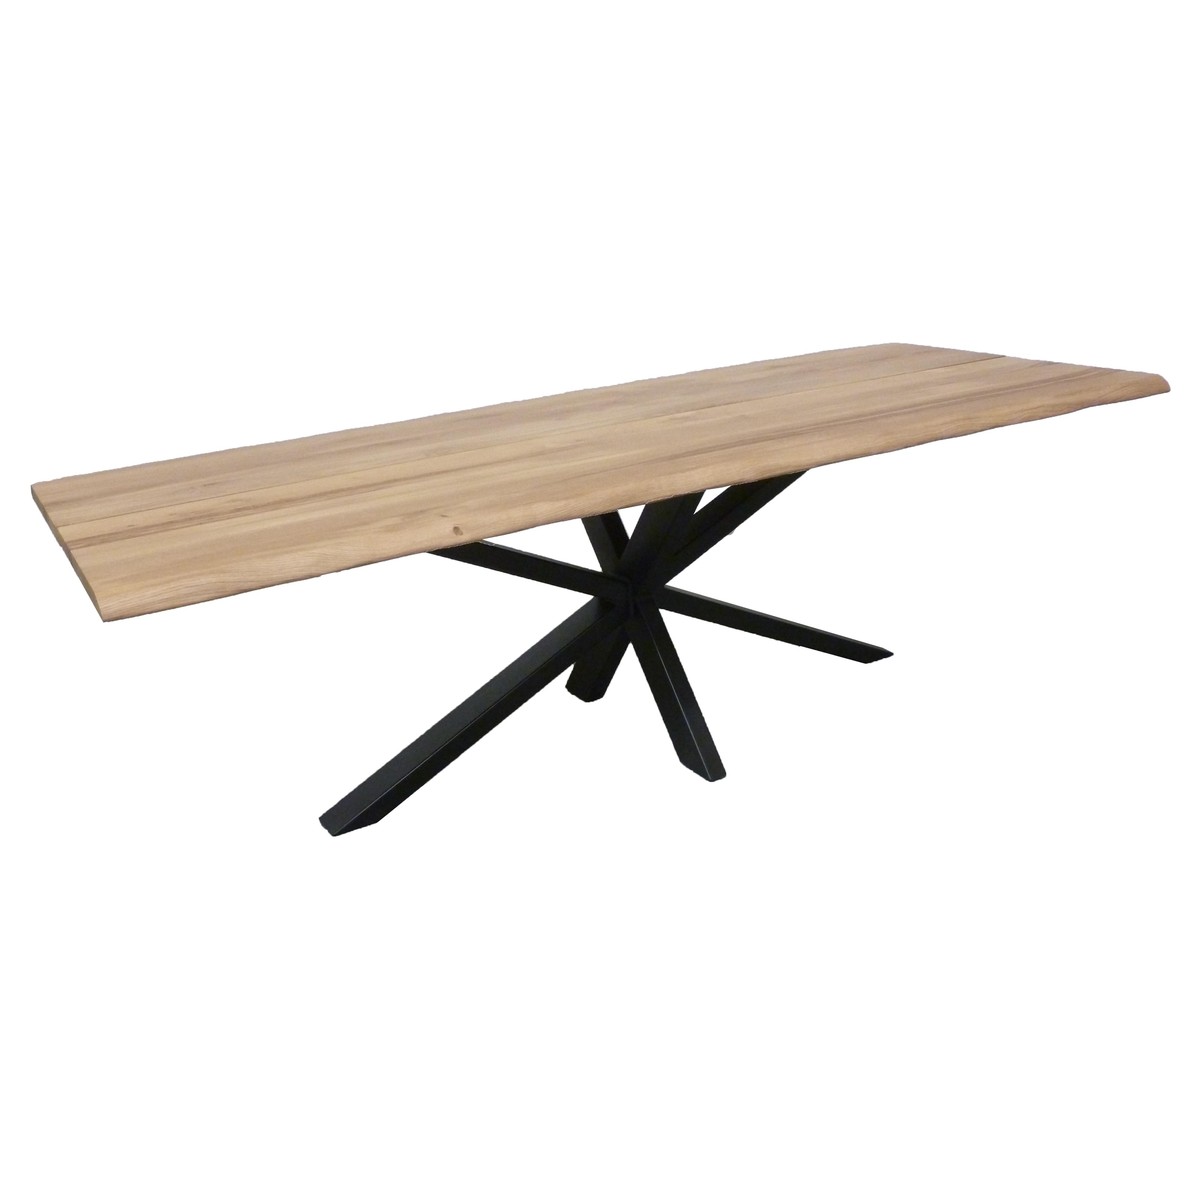   Table Maro Trunk ouverte rectangulaire  200x100x77cm